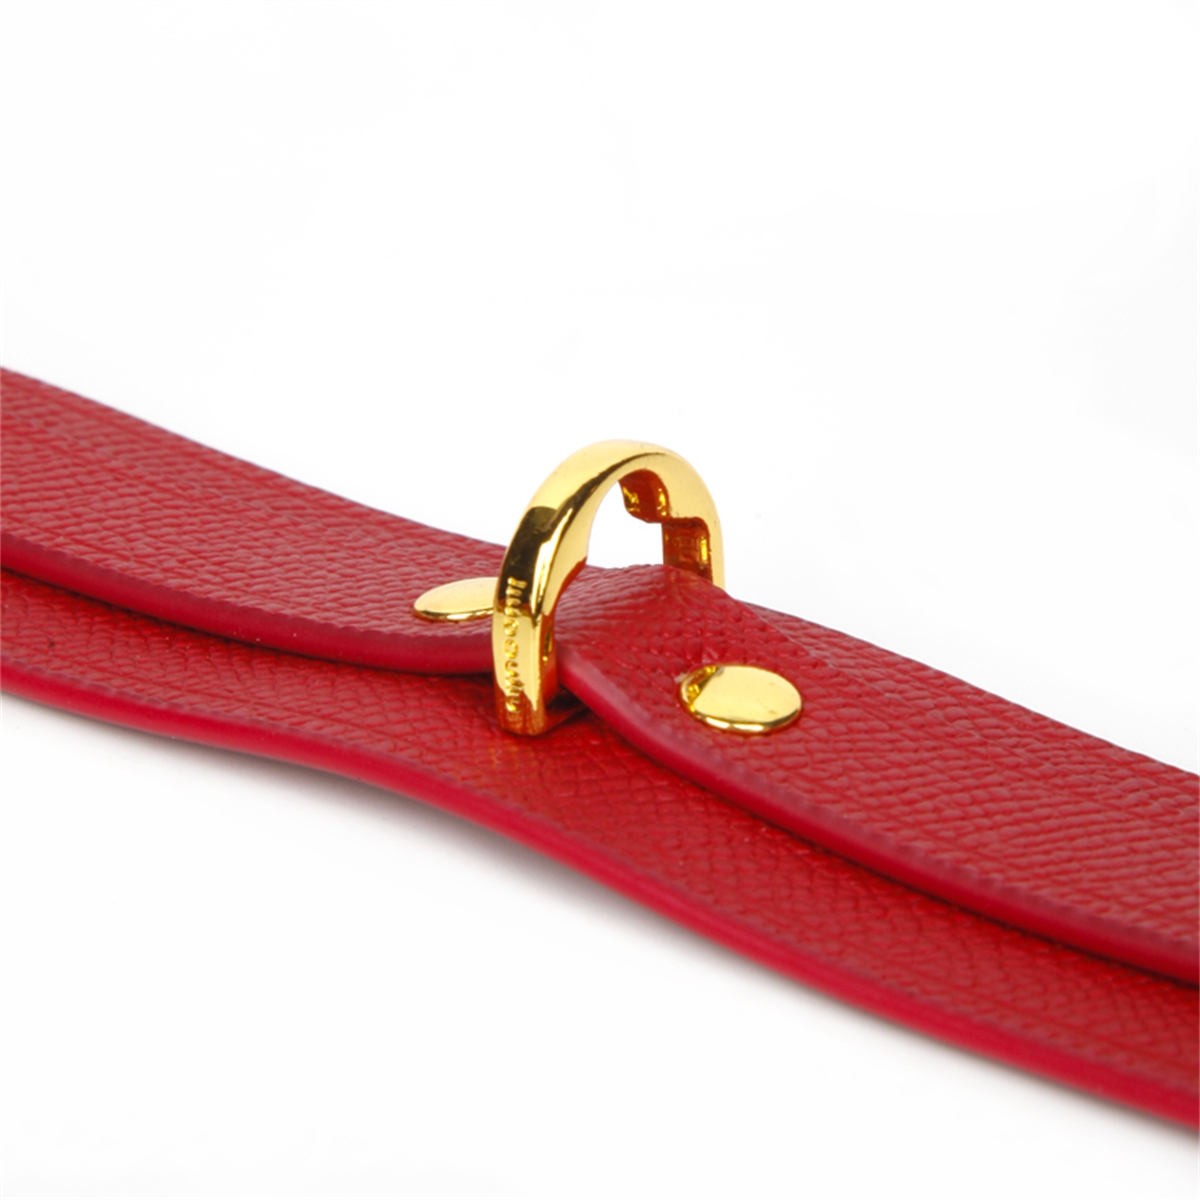 Luxury Cardinal Red BDSM Leather Restraint Bondage 5-Piece Kit